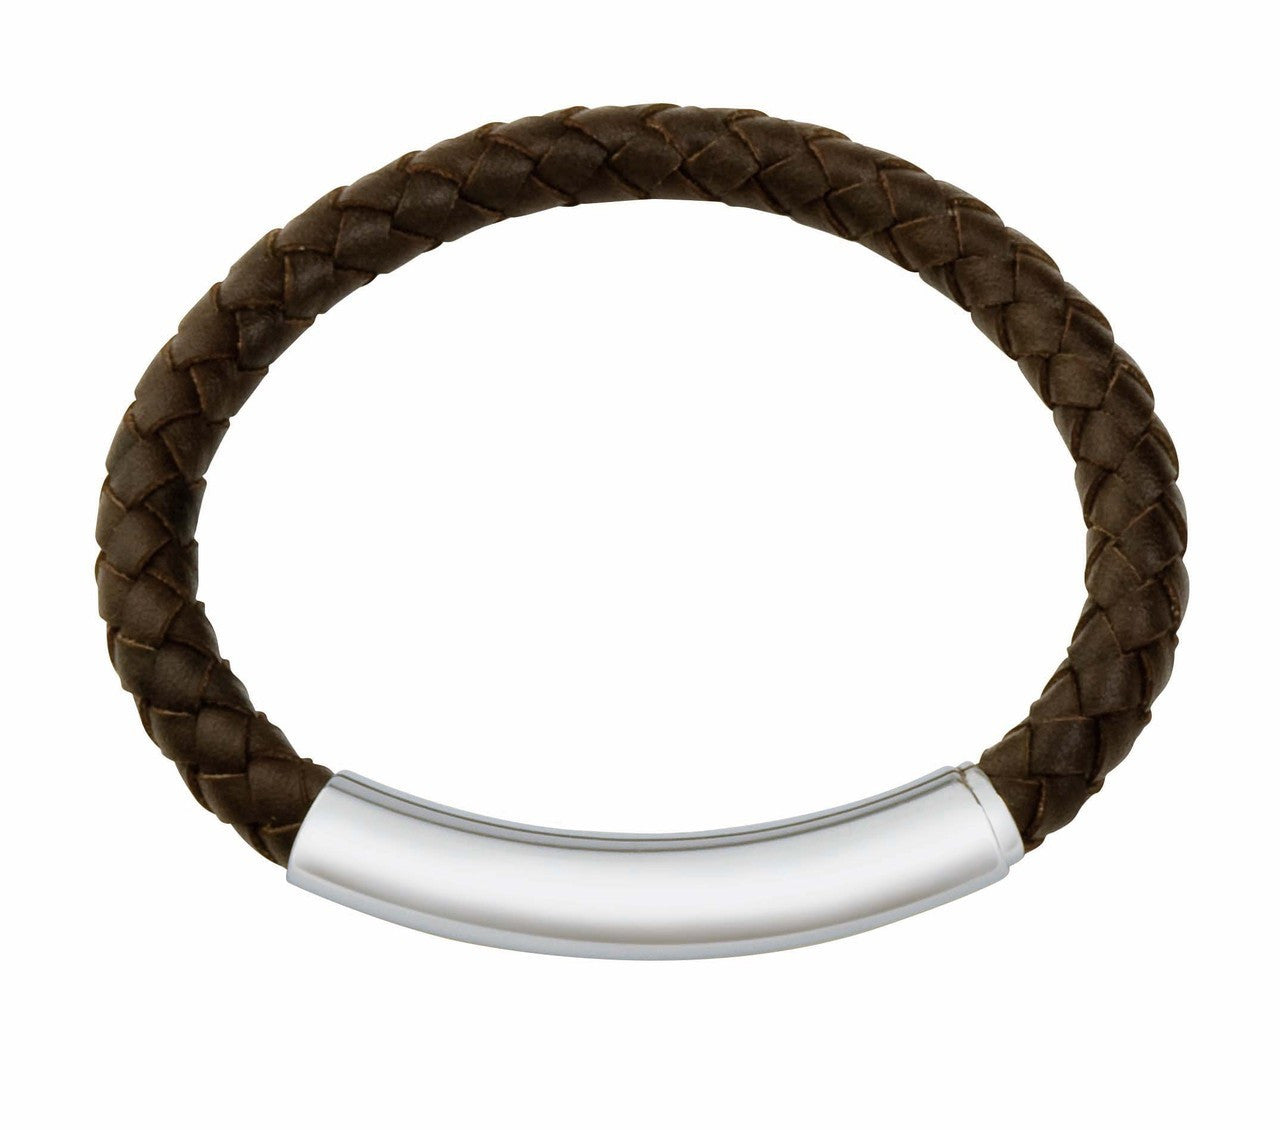 Cob02 leather and steel adjustable bracelet